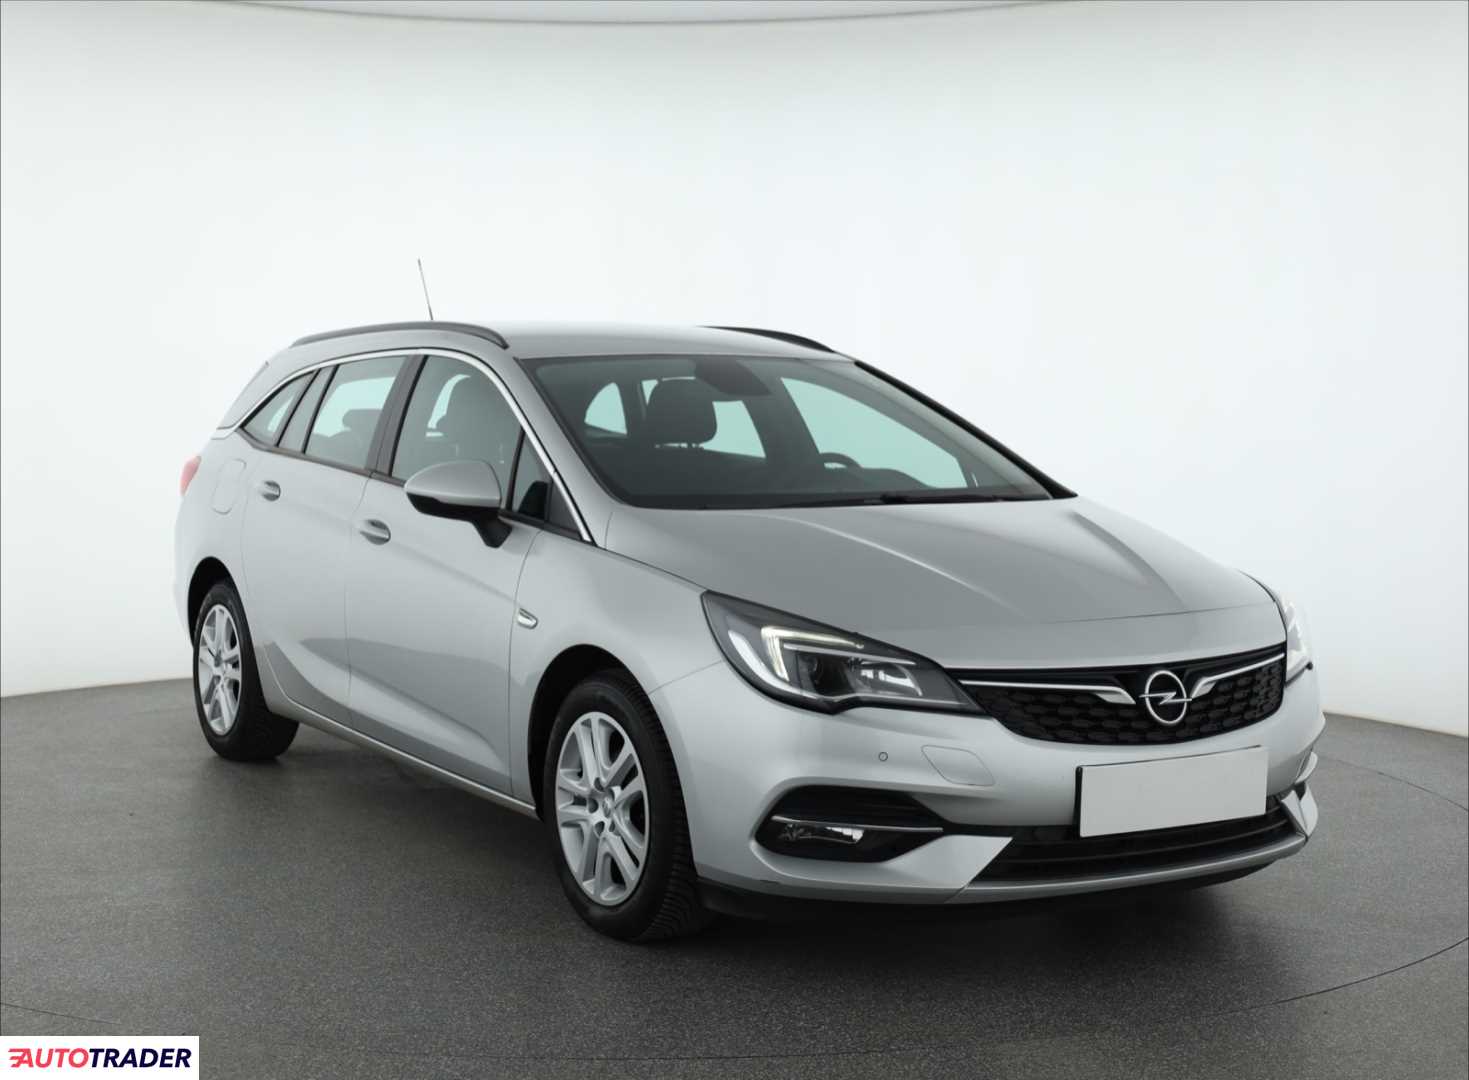 Opel Astra 2019 1.5 103 KM